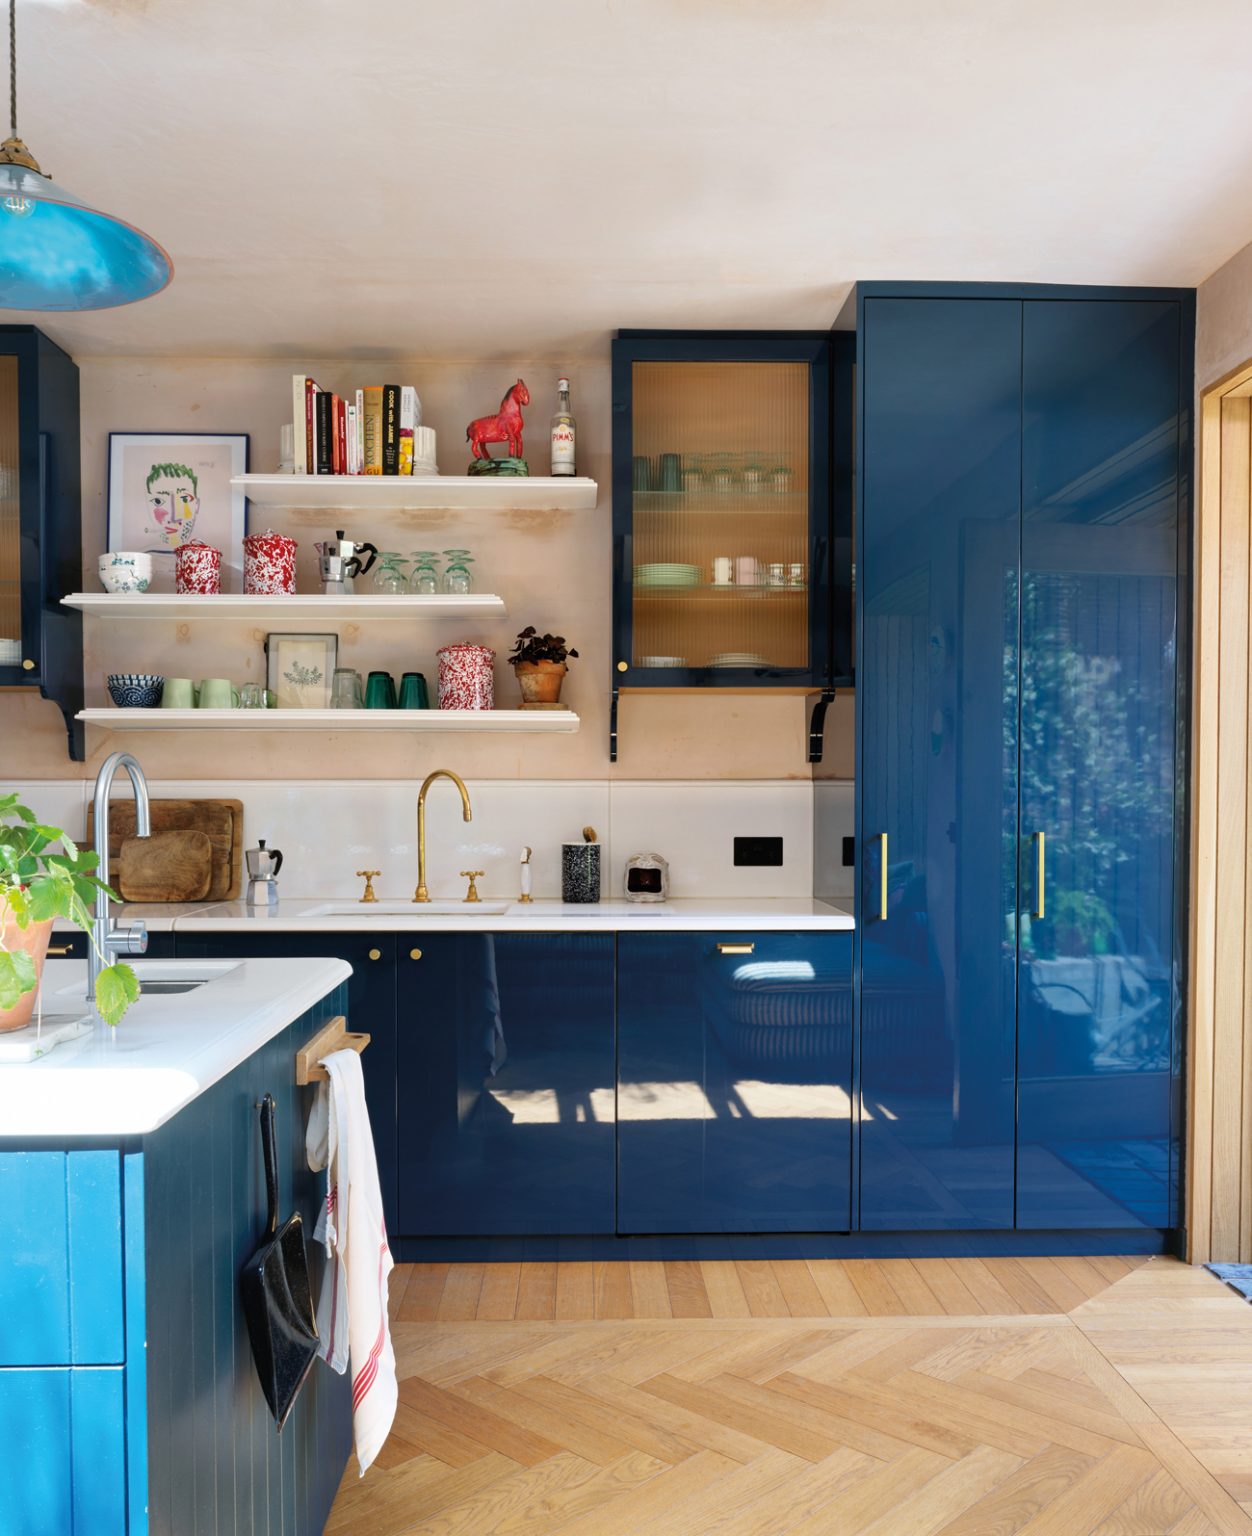 Beata Heuman's latest colourful home transformation | Homes & Interiors ...